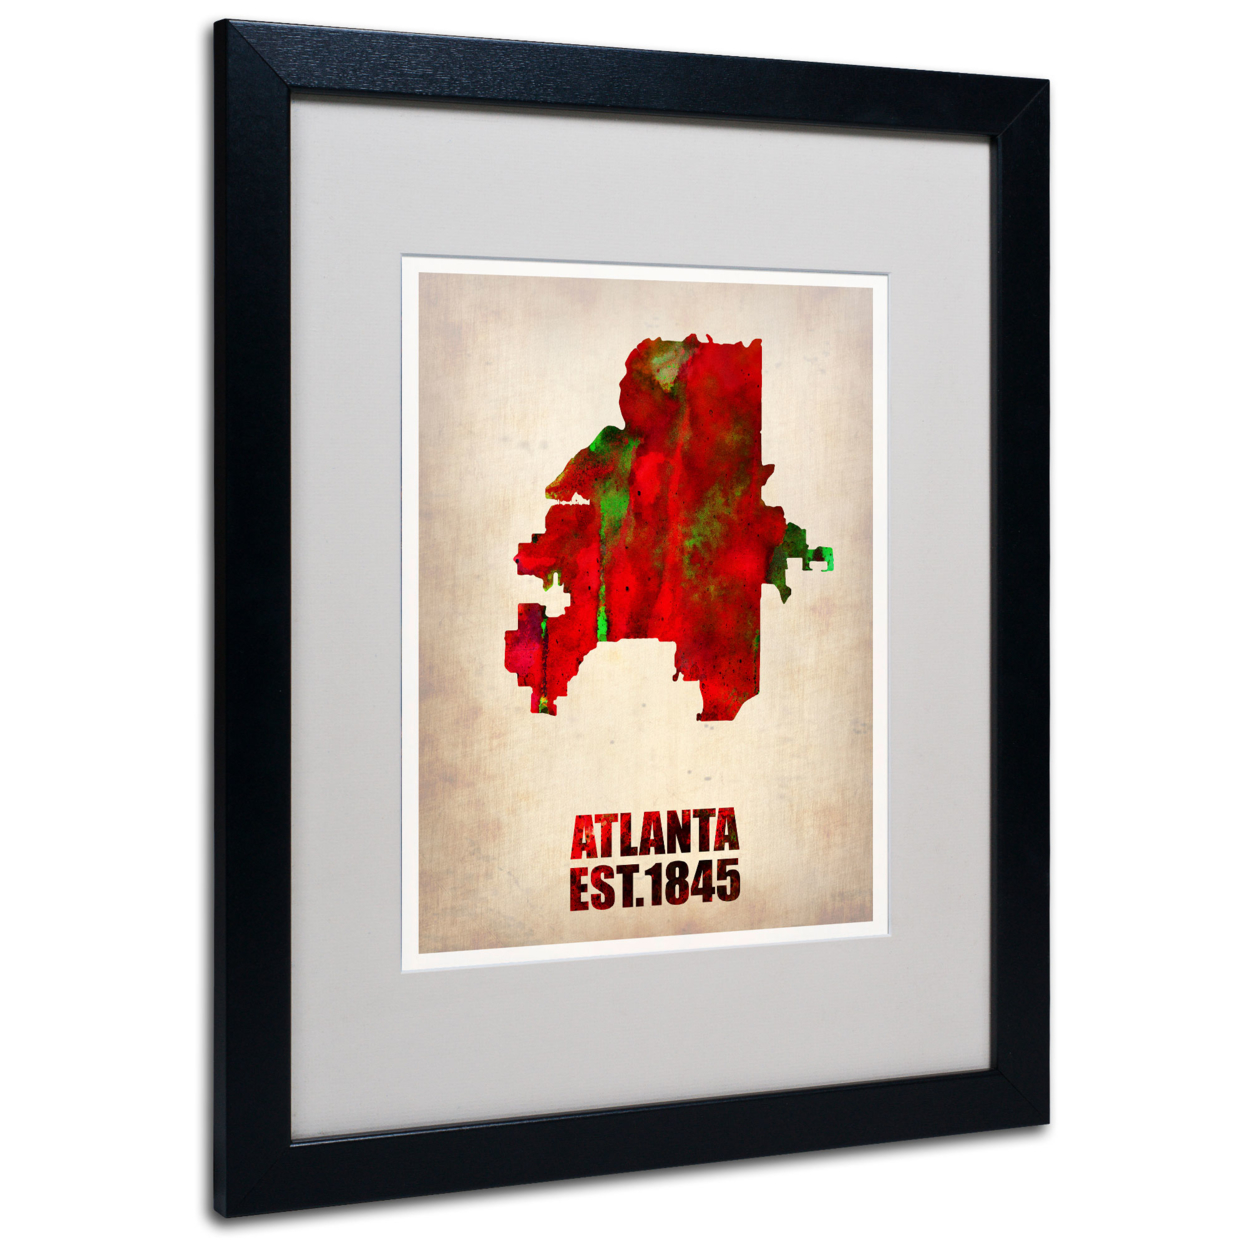 Naxart 'Atlanta Watercolor Map' Black Wooden Framed Art 18 X 22 Inches